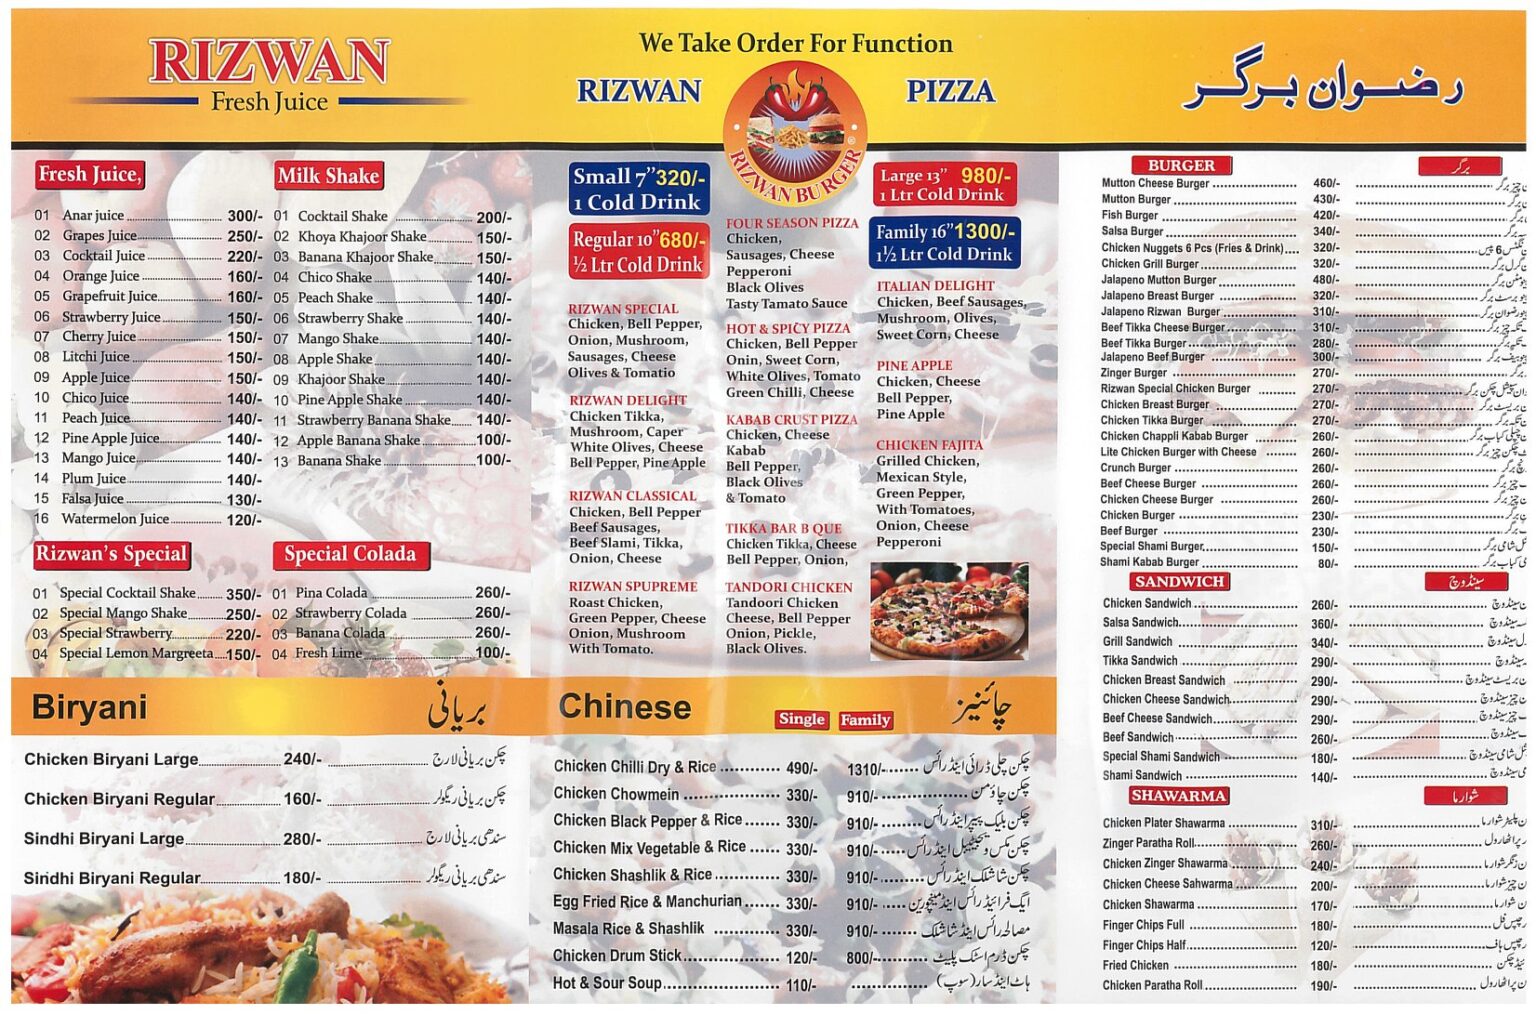 Rizwan Burger Main Market Menu Prices Location Address Number.